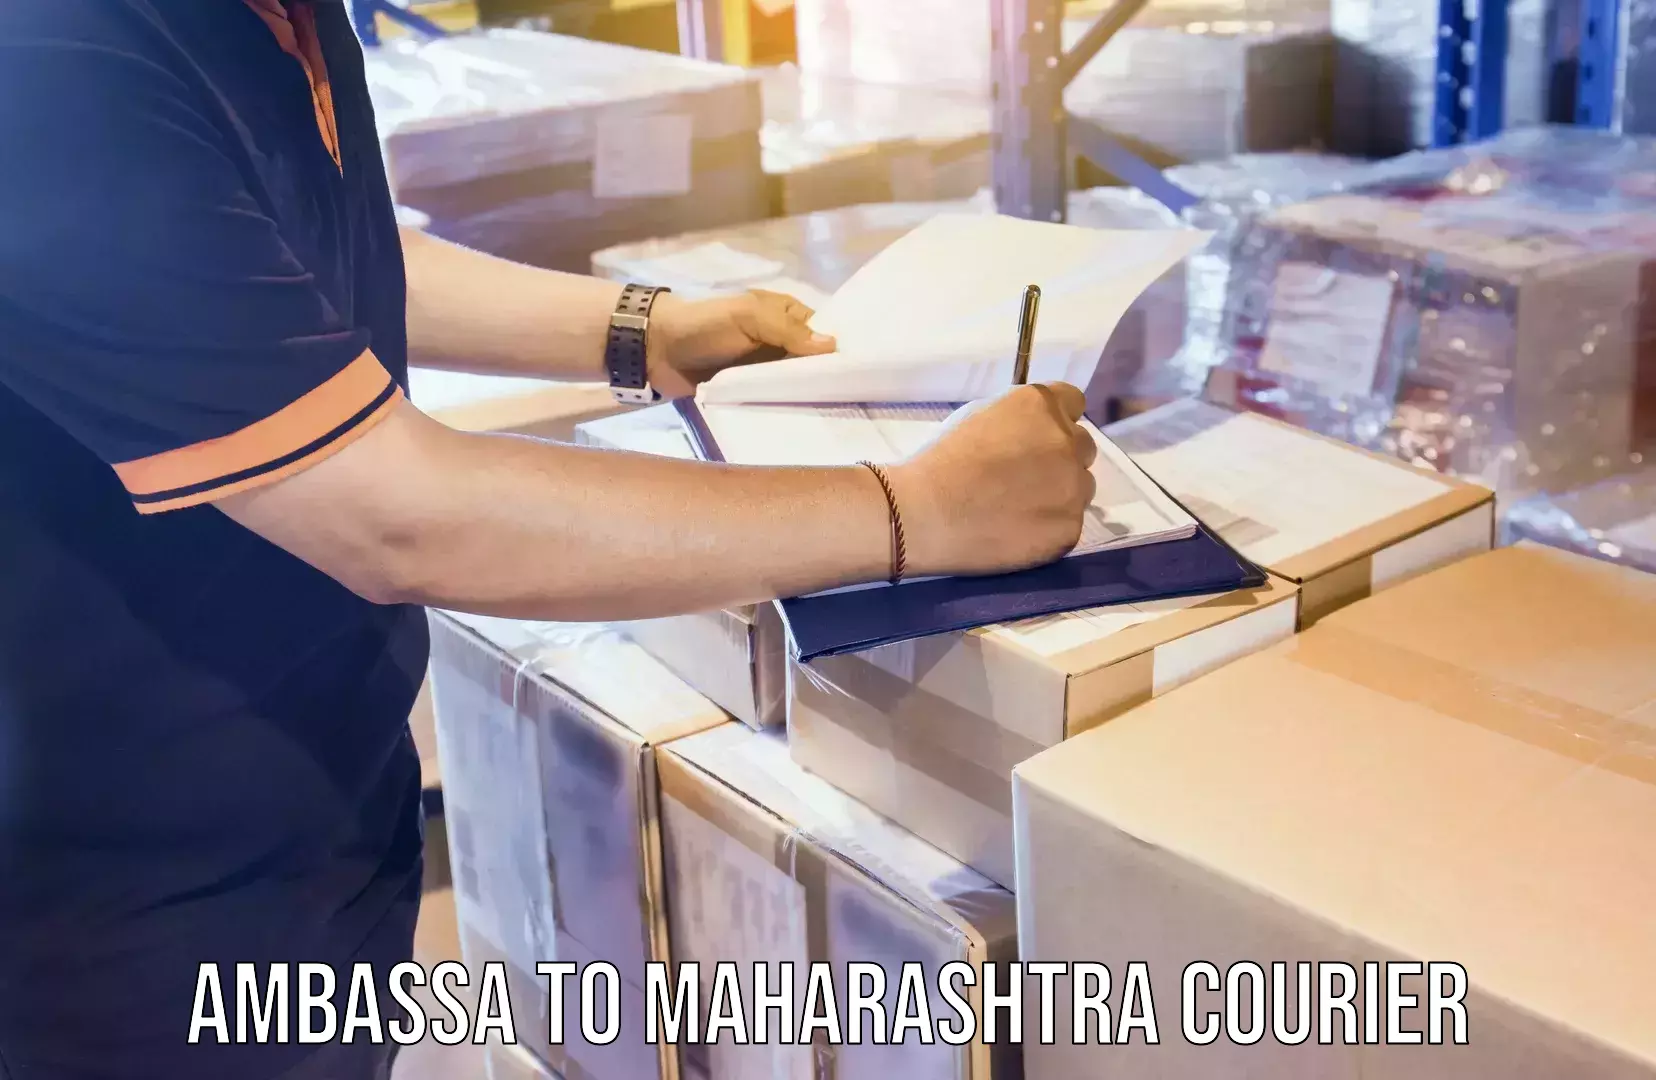 Pharmaceutical courier Ambassa to Maharashtra